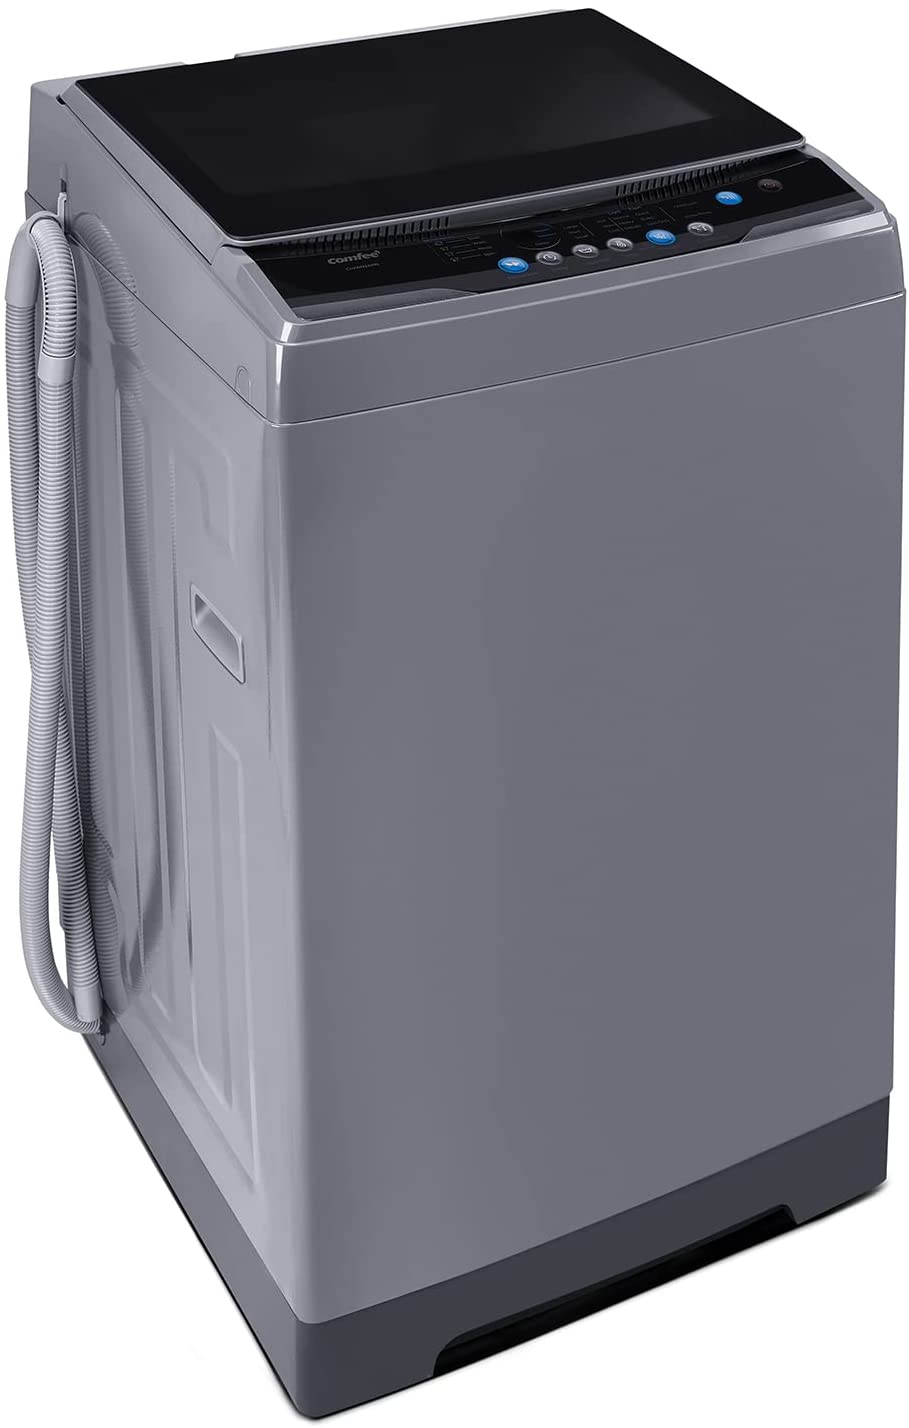 COMFEE' Portable Washing Machine, 0.9 cu.ft Compact Washer Review